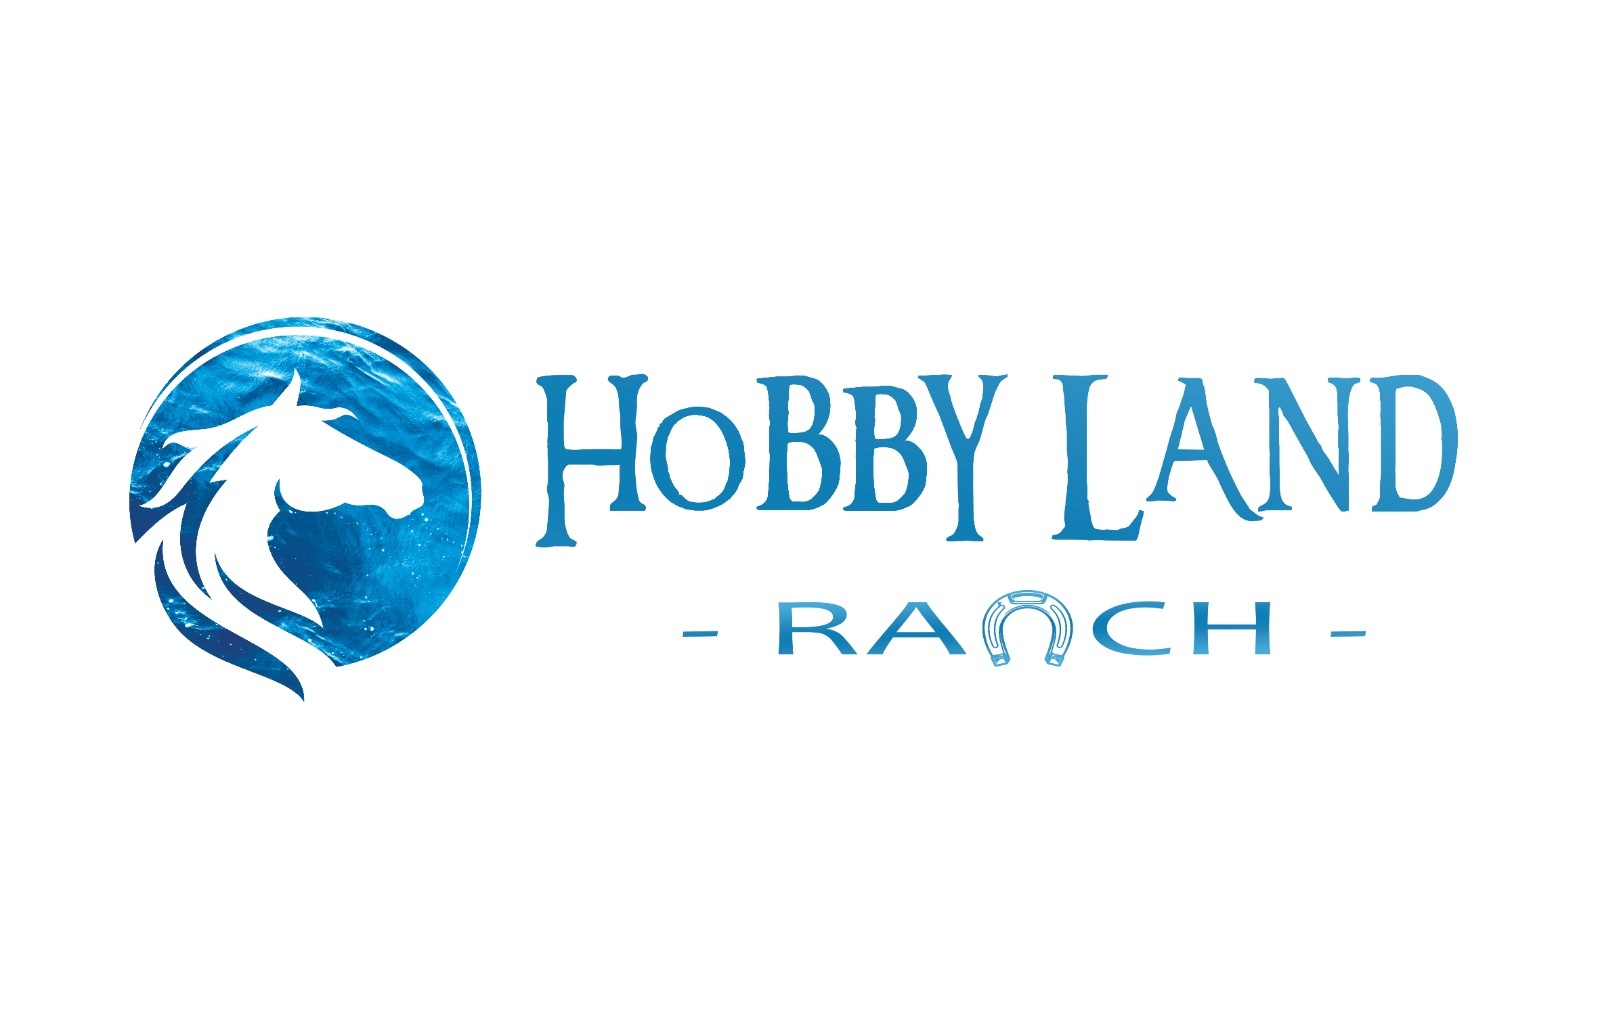 Hobby Land Ranch